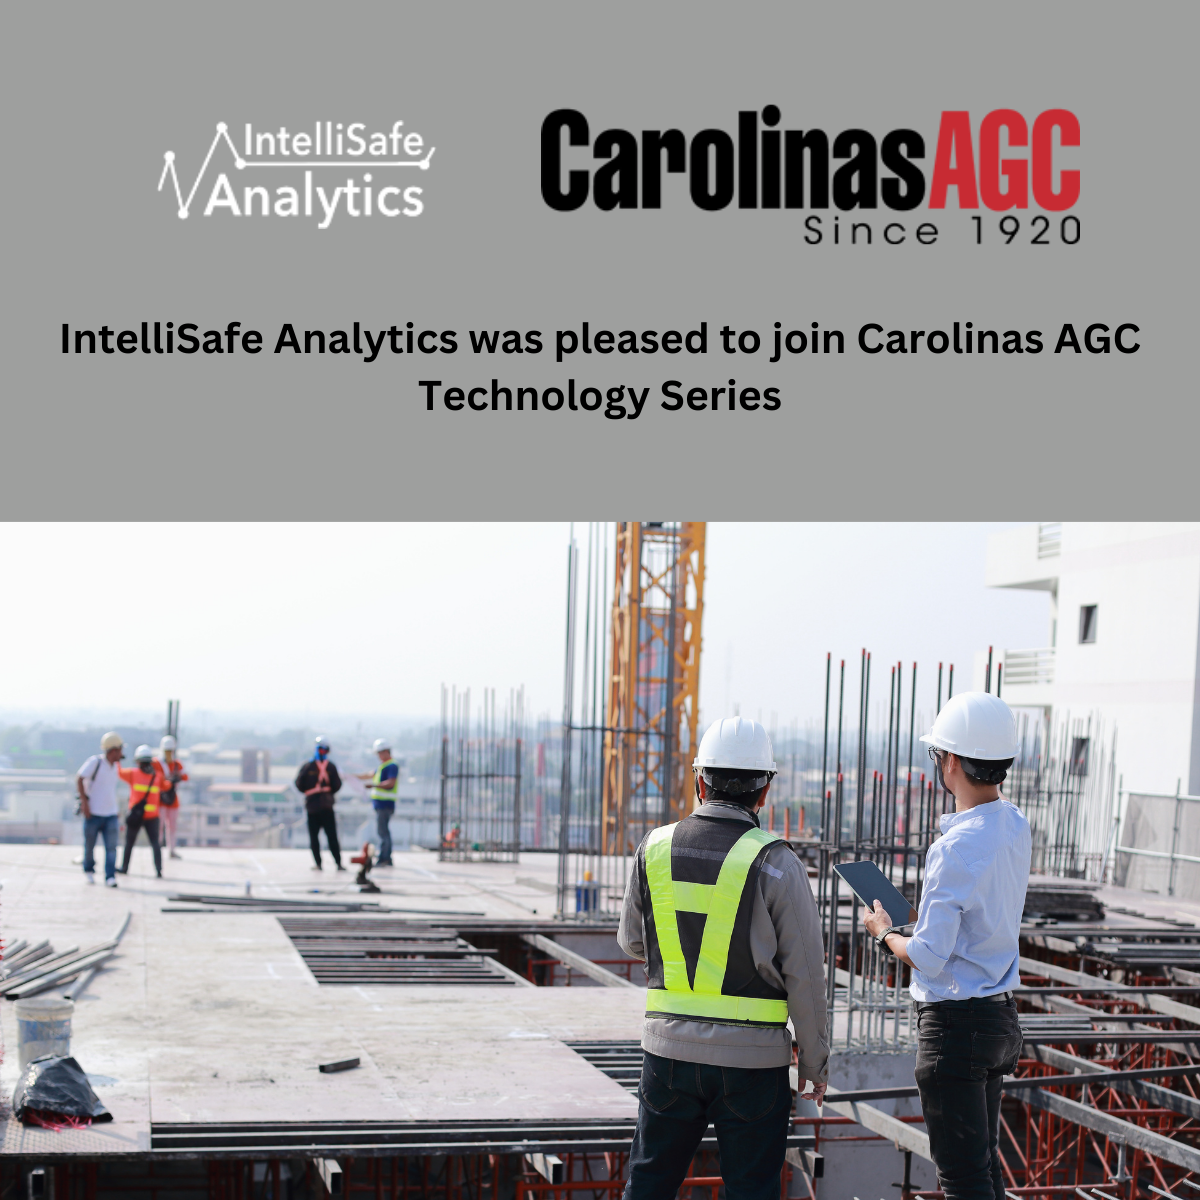 IntelliSafe Analytics Carolinas AGC Technology Series last Thursday, April 18.